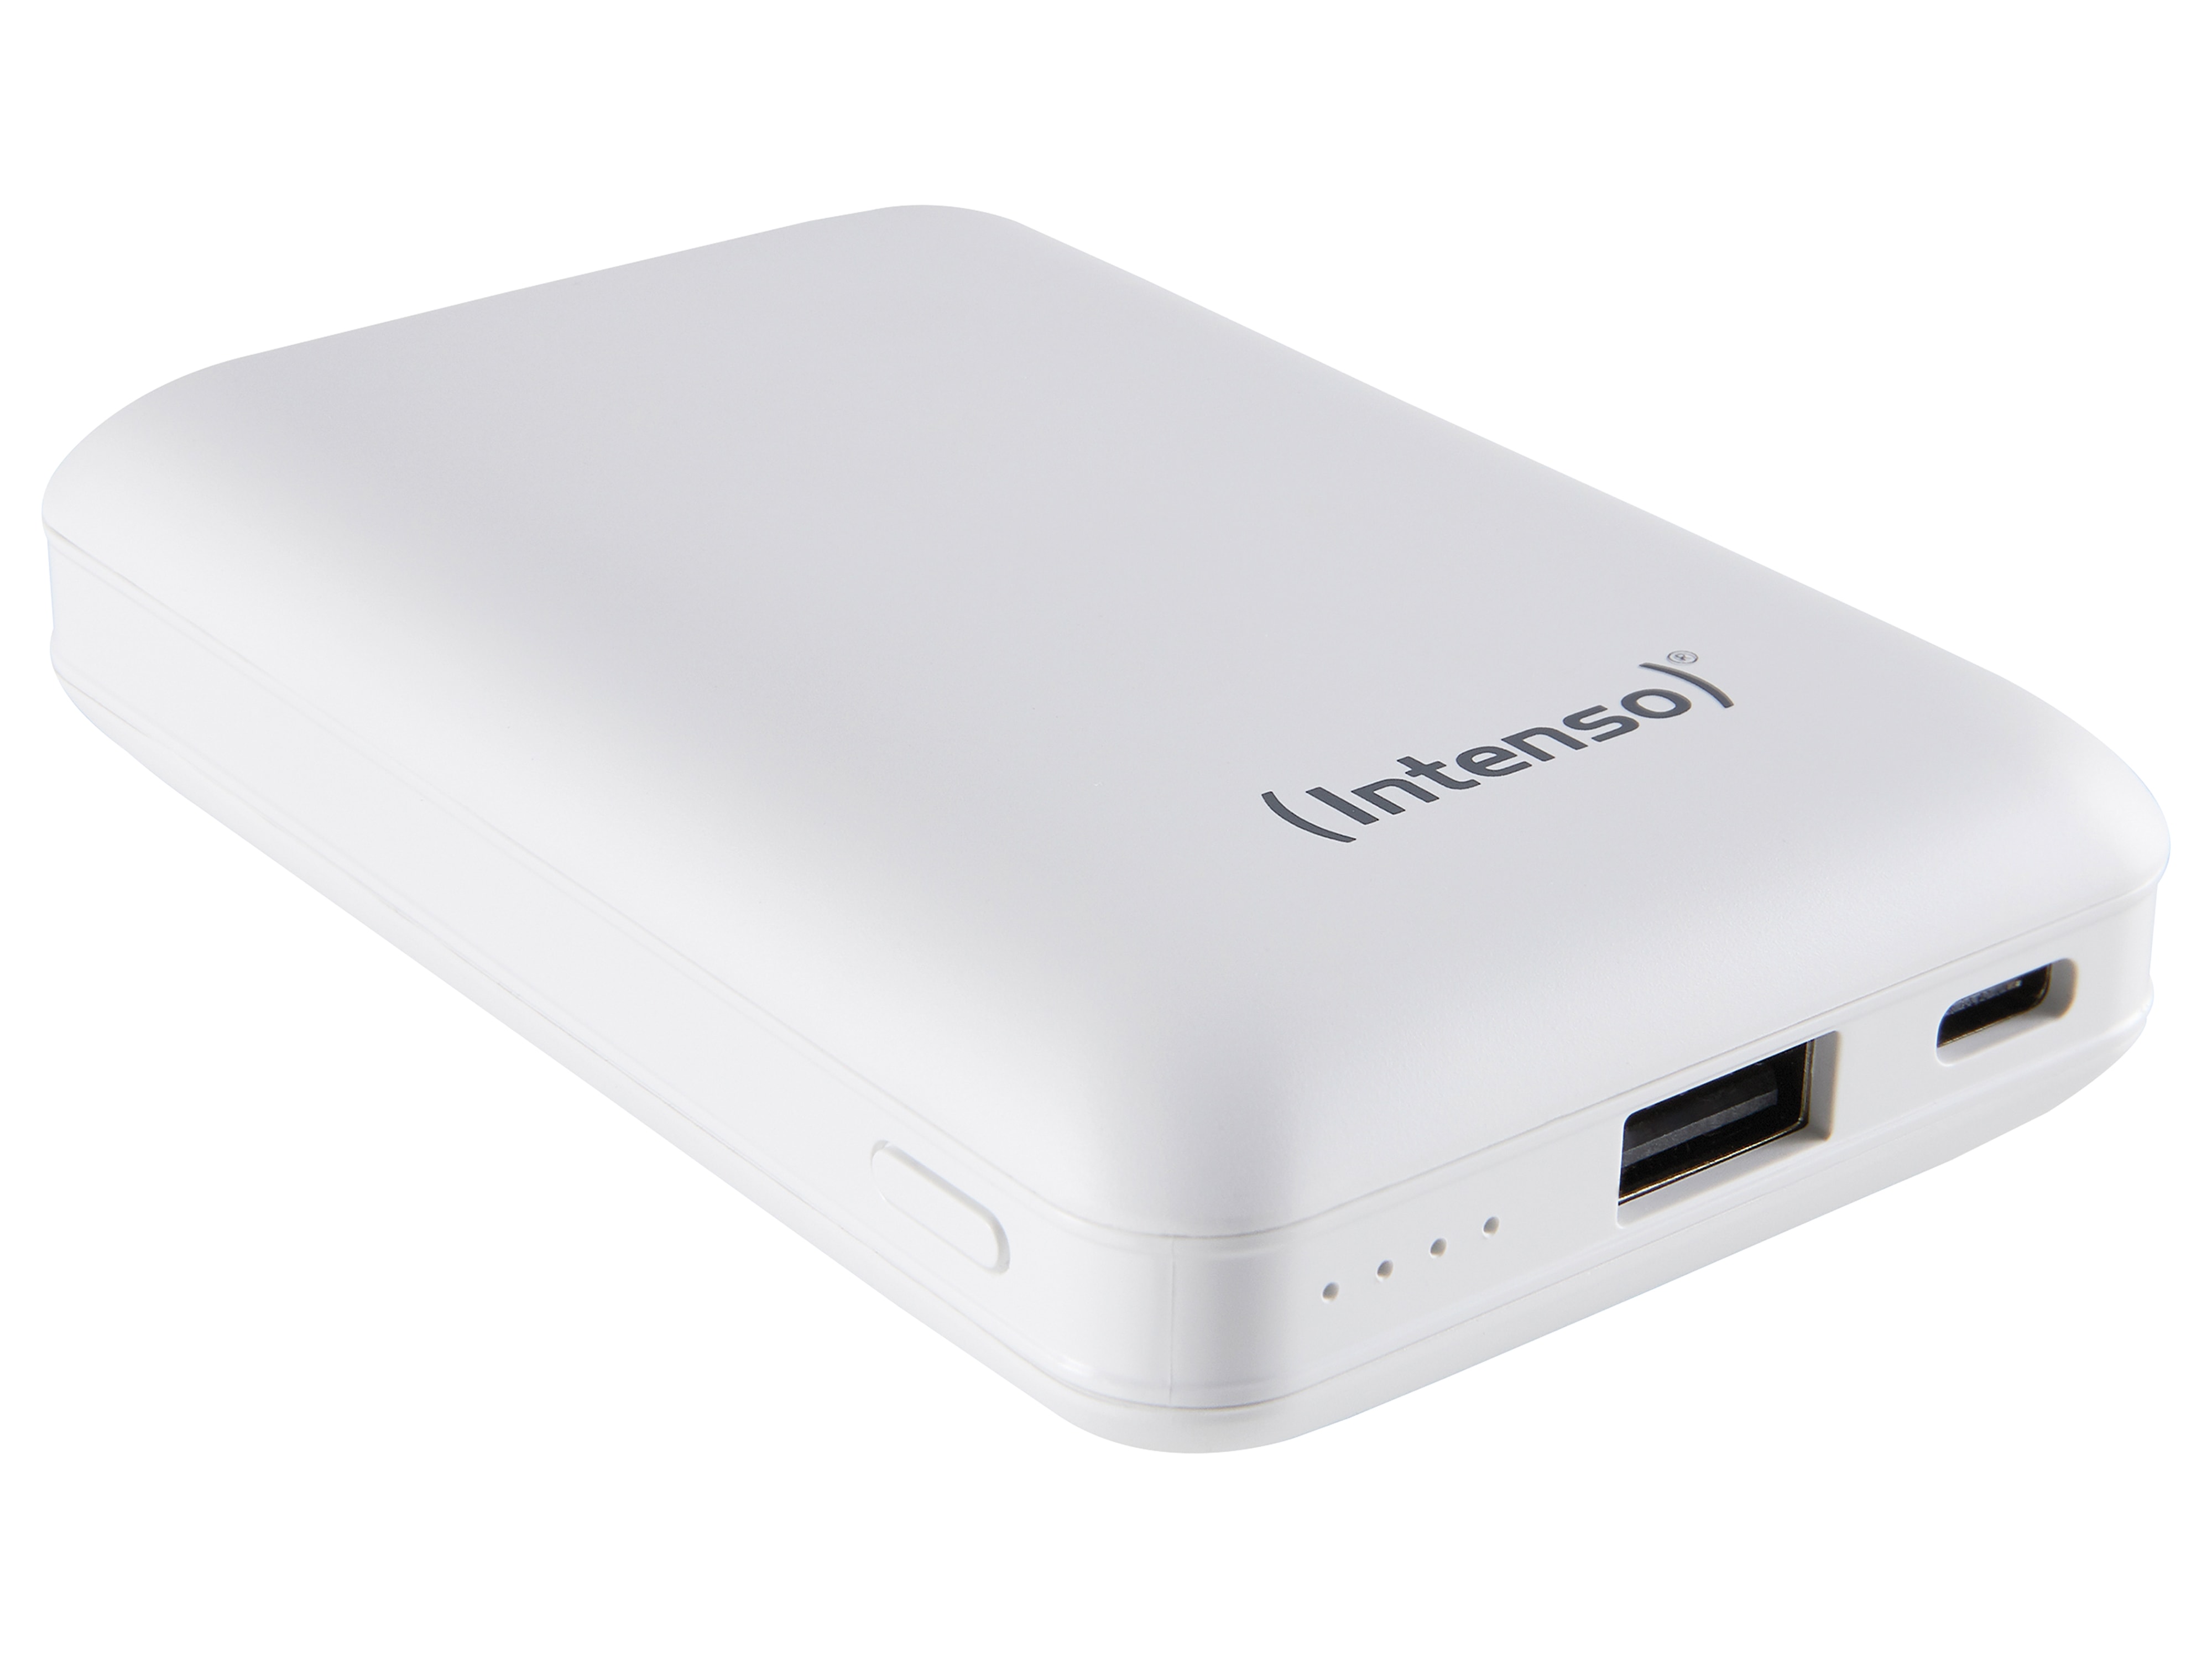 INTENSO USB Powerbank 7314532 XC 10000, 10.000 mAh, weiß